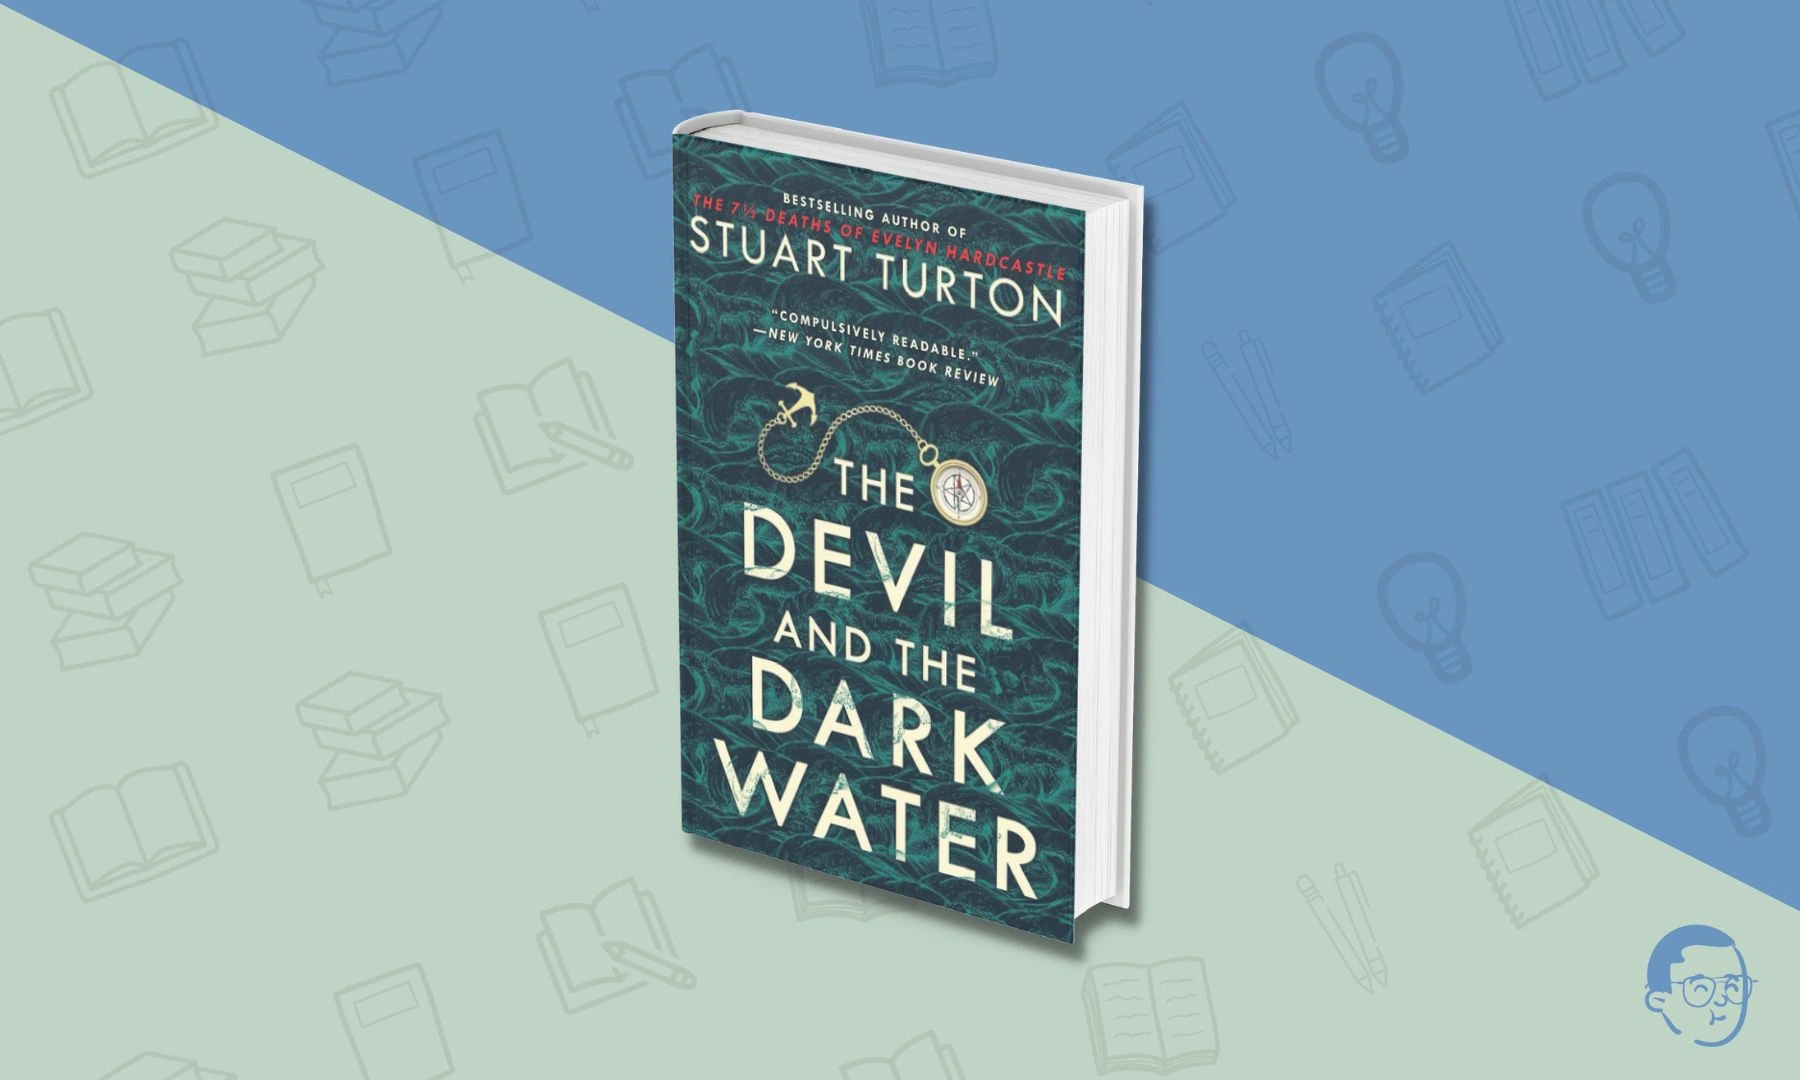 The Devil in the Dark Water by Stuart Turton